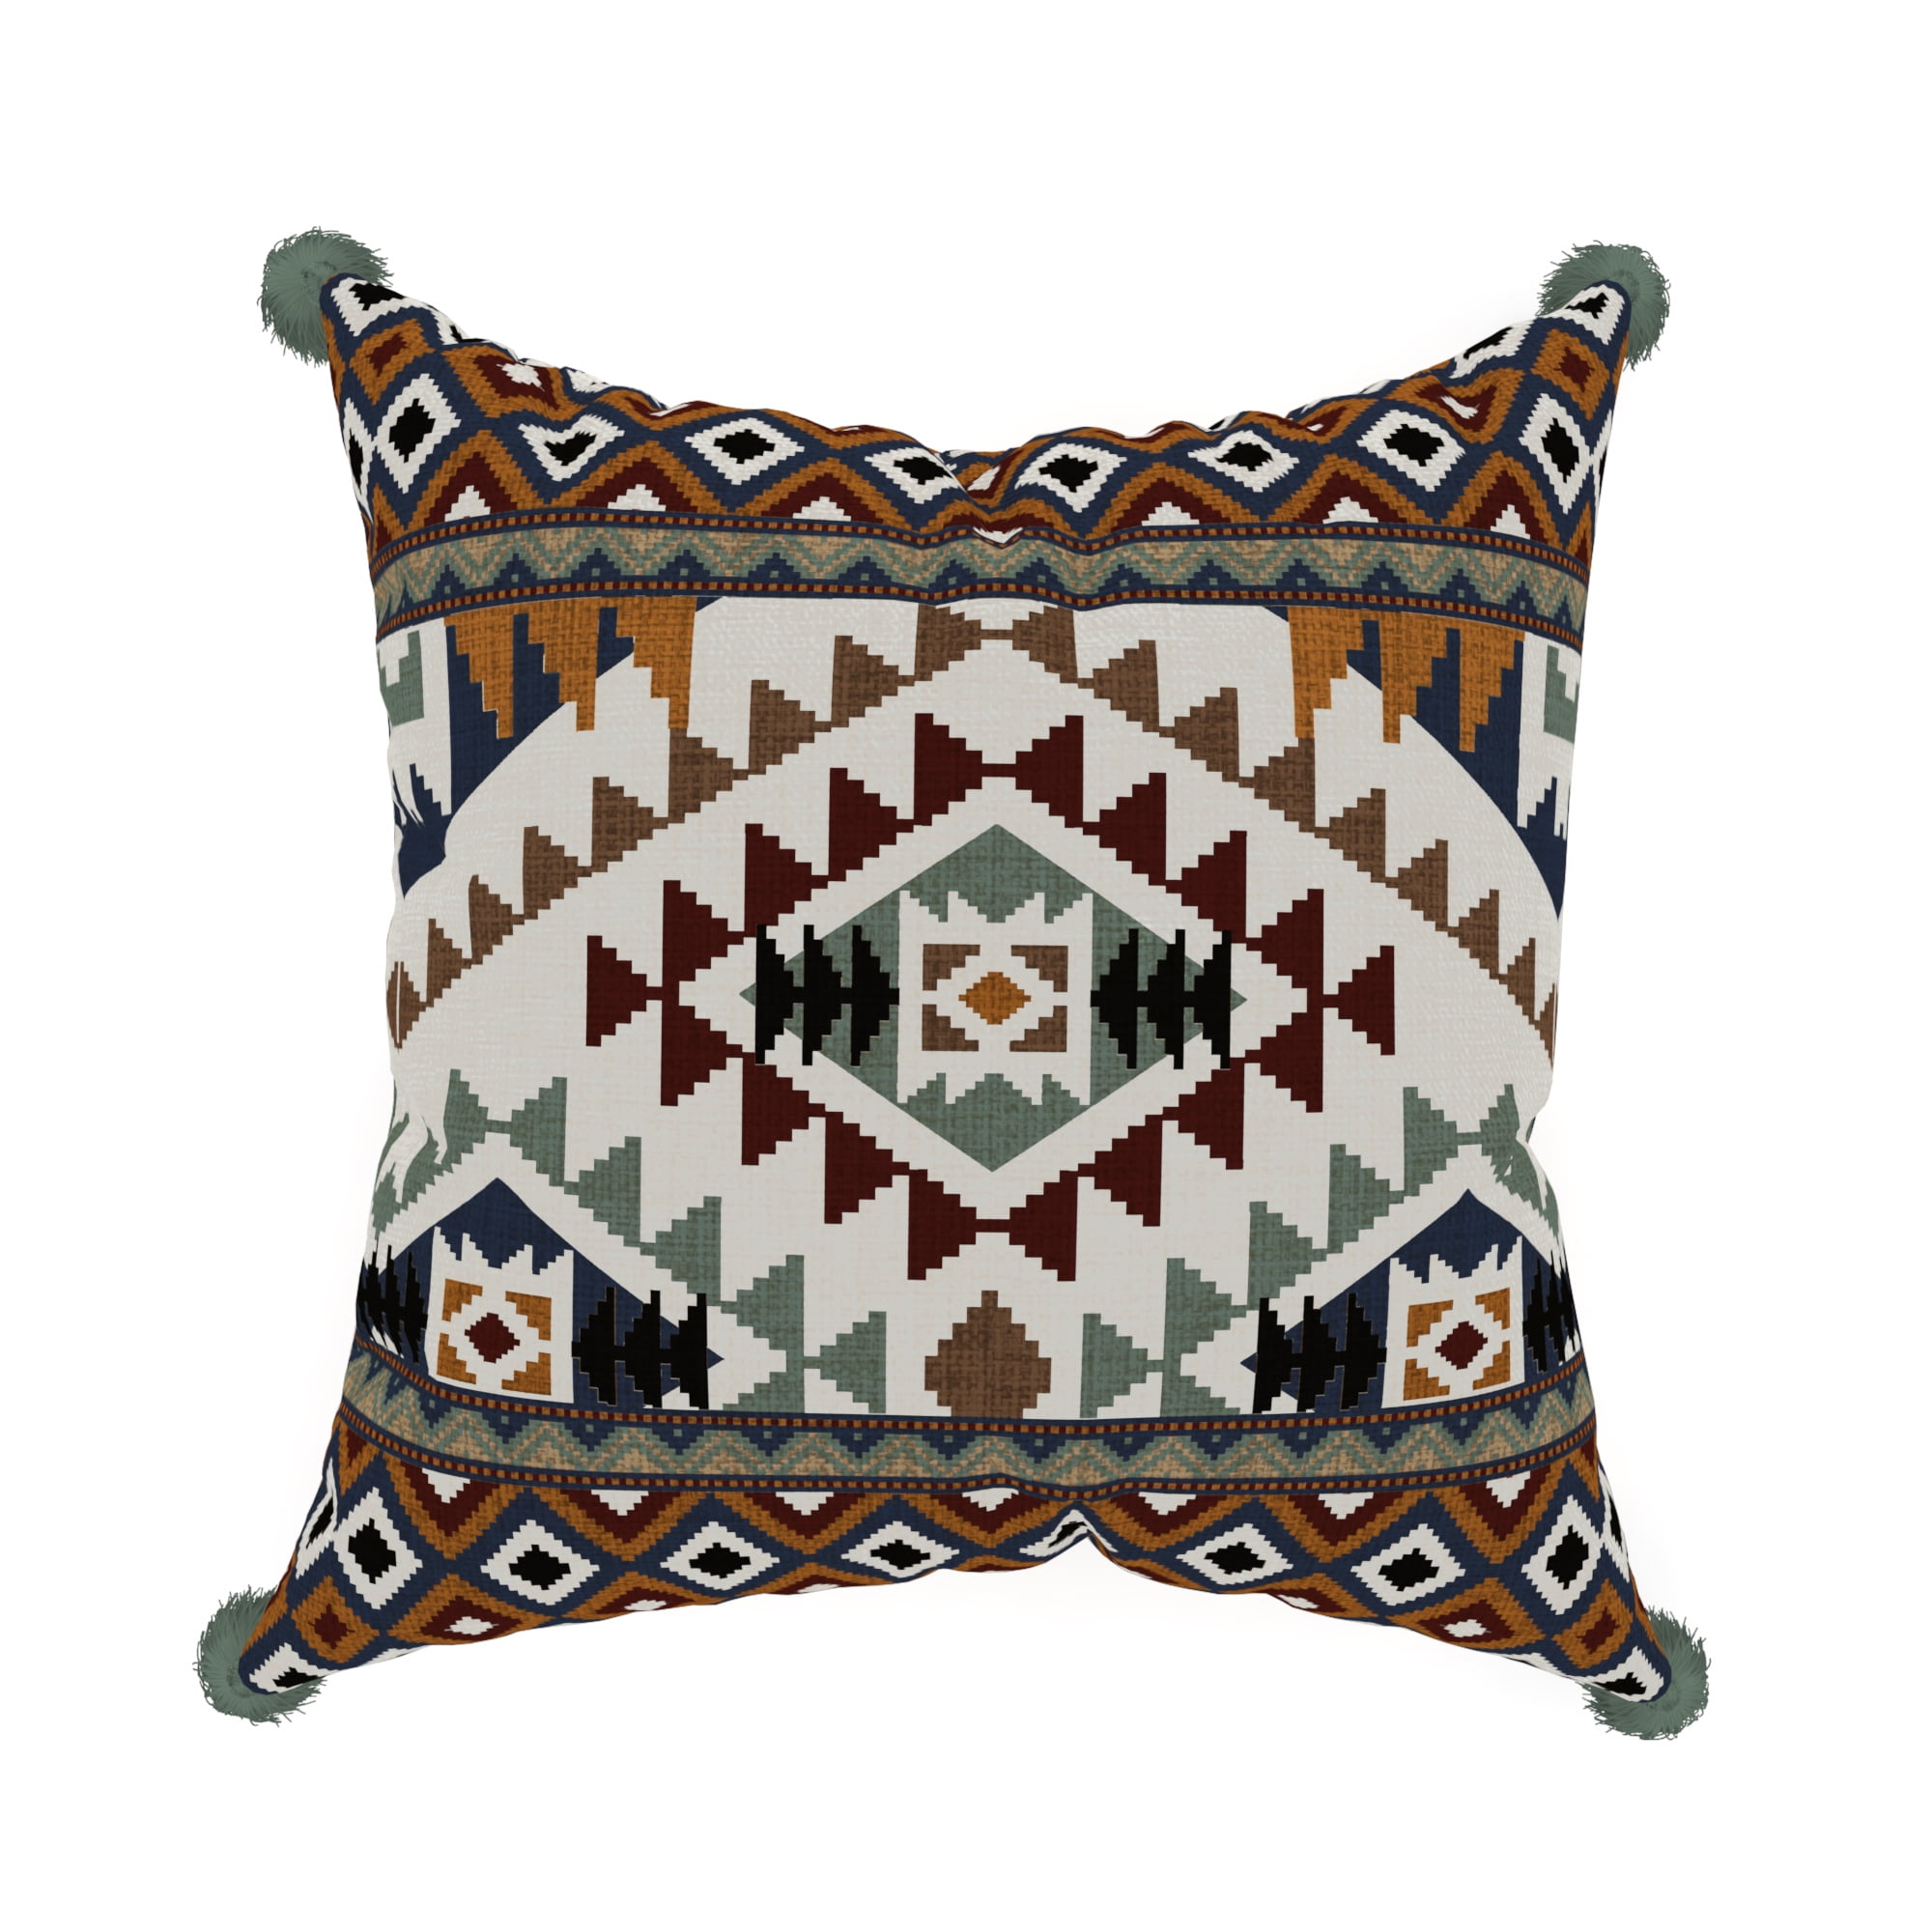 Native American Eye Black Pom Poms Cushion Cover 100% Hand Printed Linen 18X18" 